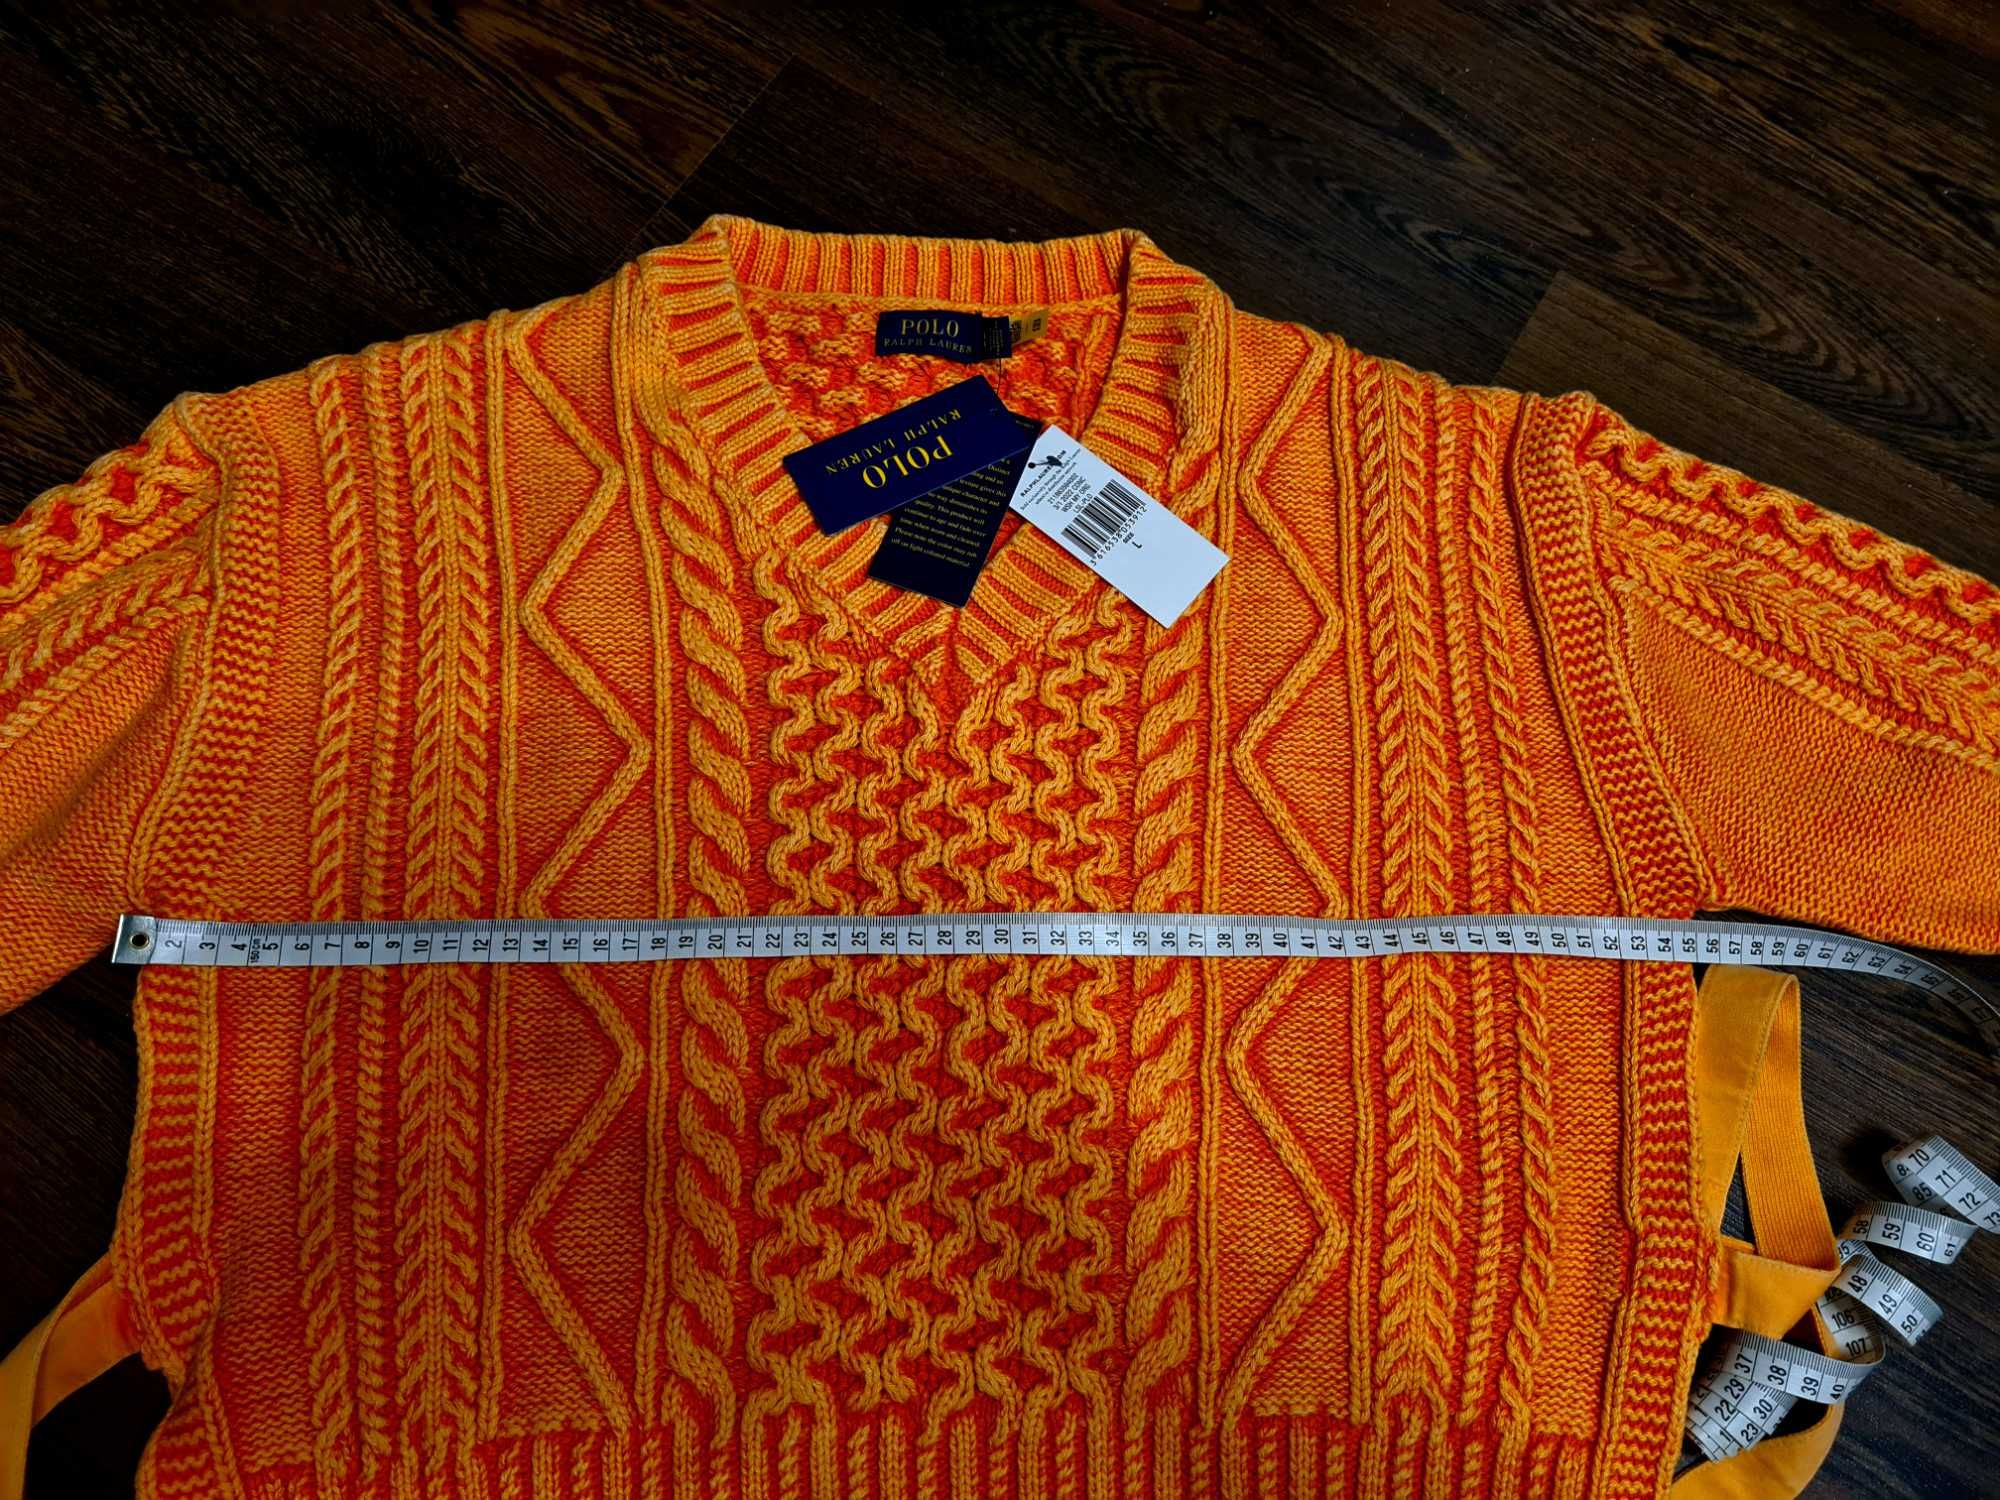 Sweter Ralph Lauren pomarańczowy L